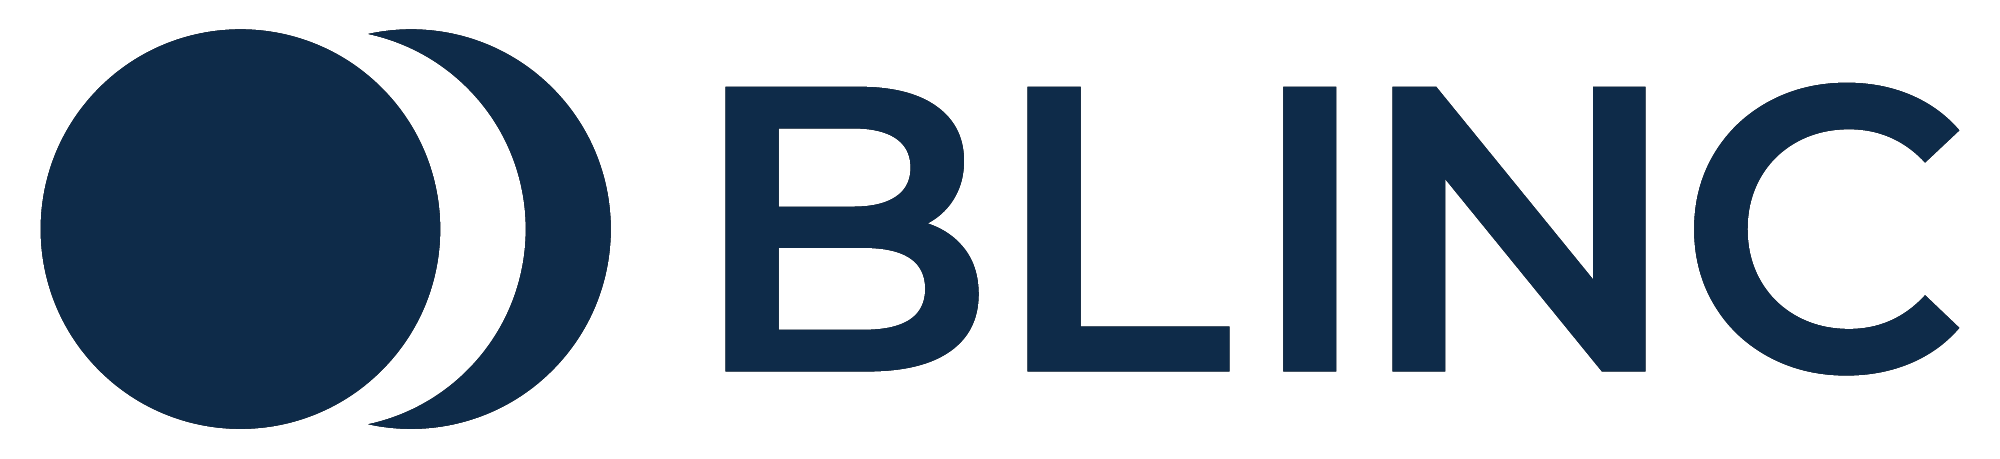 logo_blinc